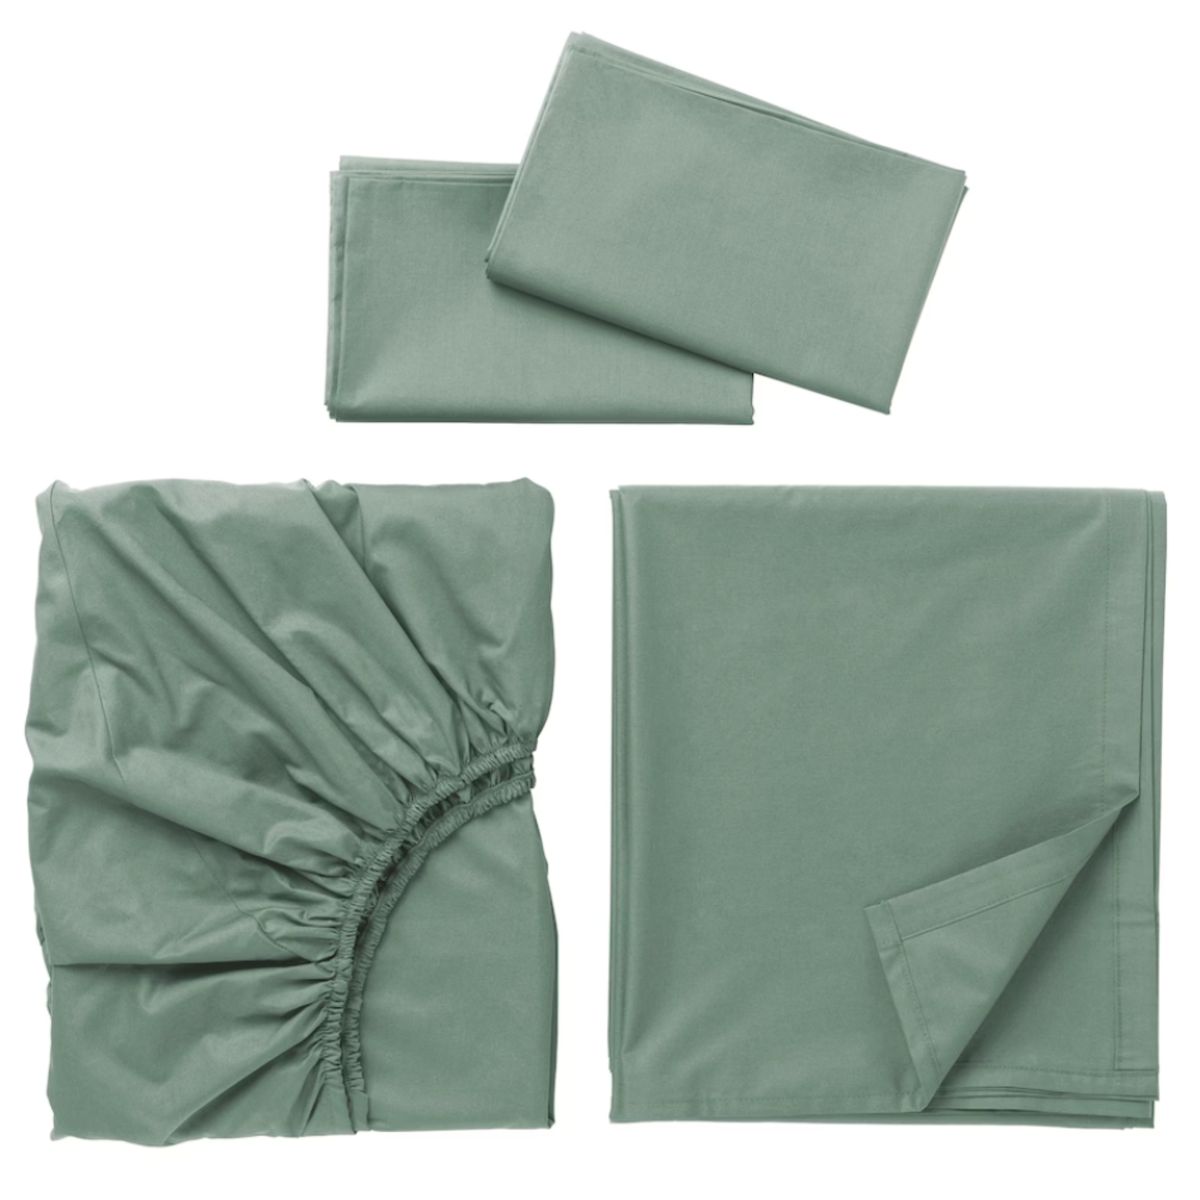 Lush Living - Fitted Sheet - Flat Sheet - 2 Pillow Cases - Green